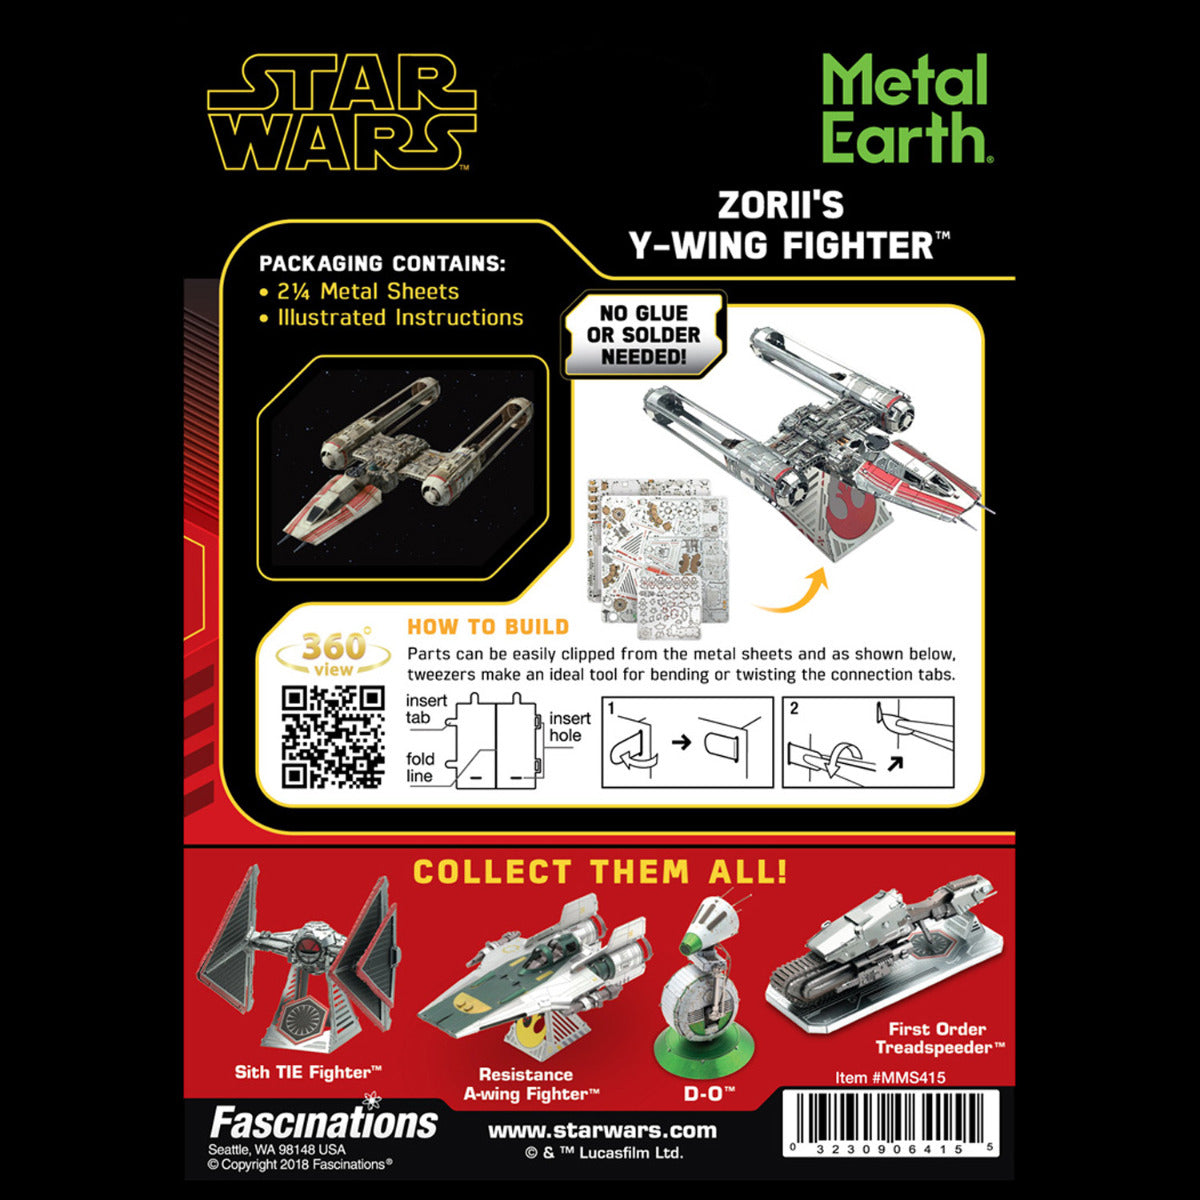 Metal Earth Metallbausätze MMS415 Star Wars “Der Aufstieg Skywalkers” Zorri's Y-Wing Fighter Resistance Metall Modell